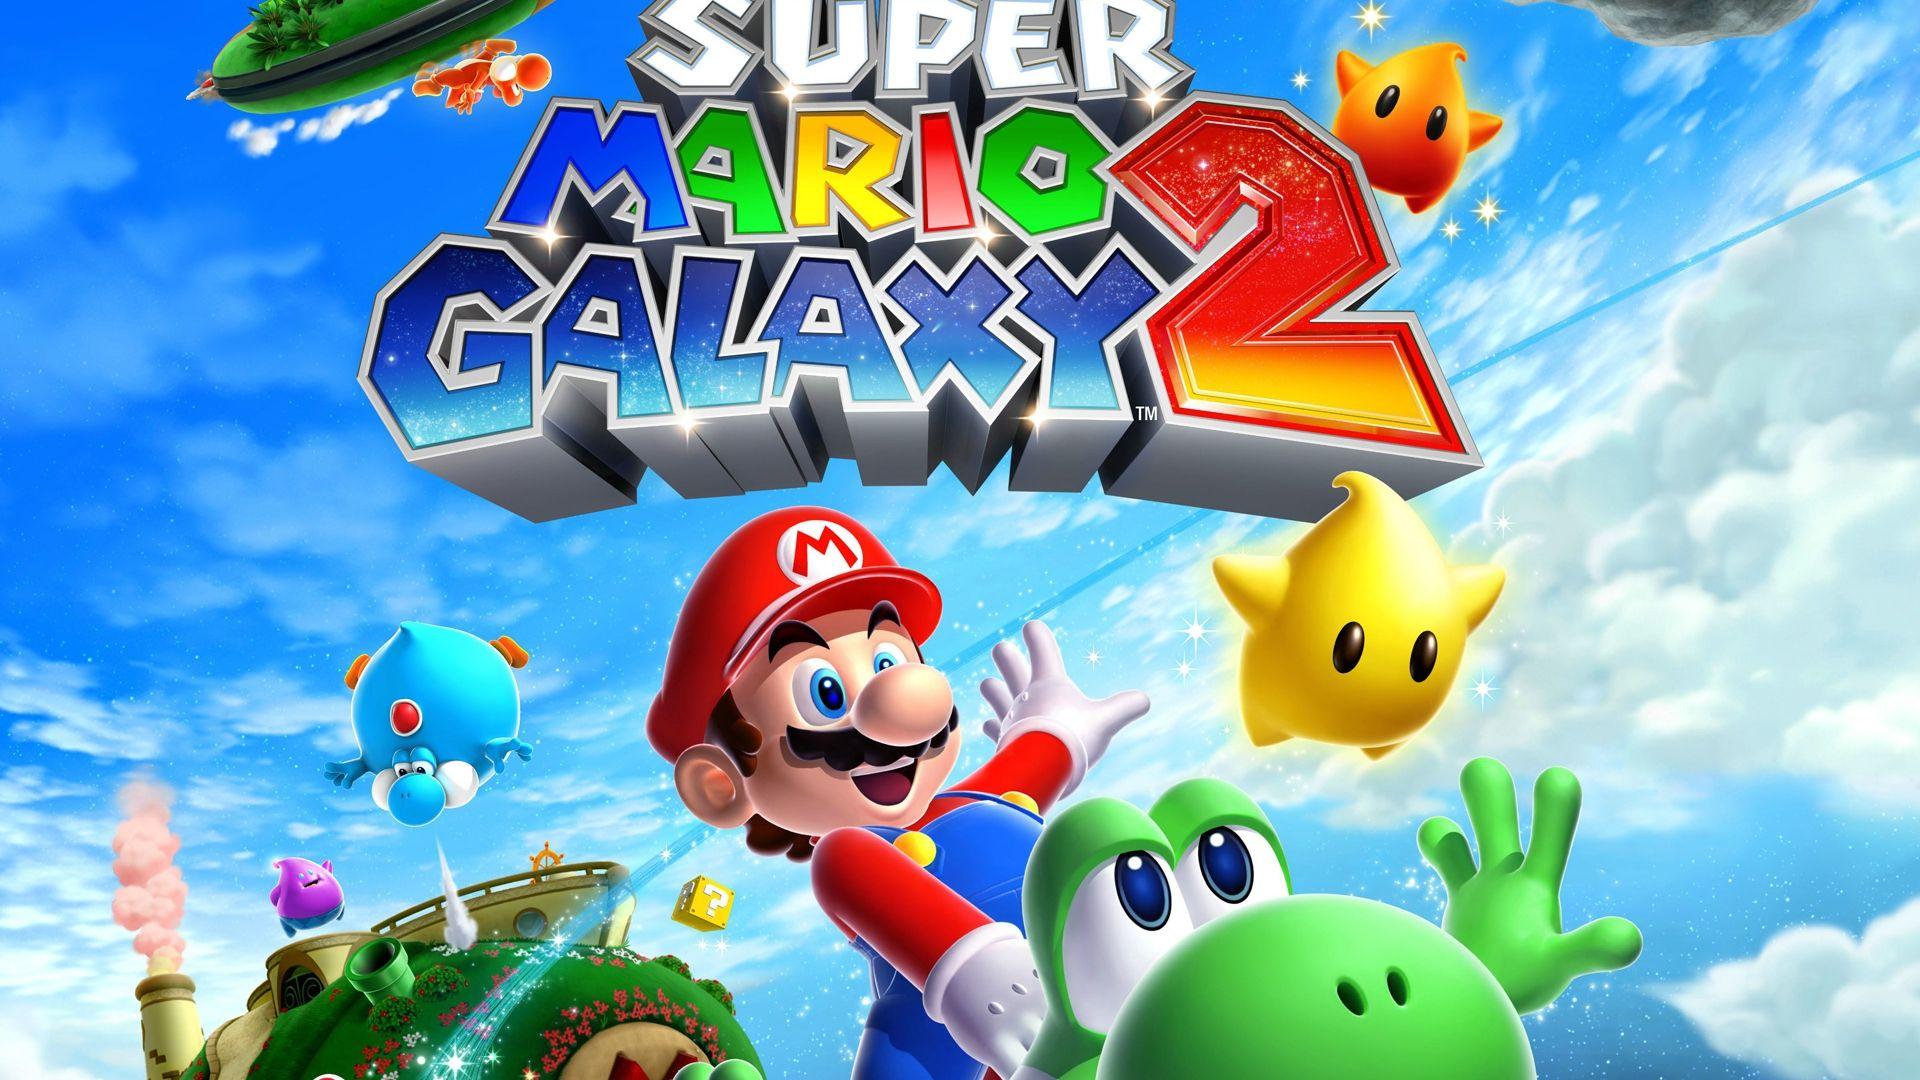 Super Mario Galaxy 2 HD Wallpaper, Background Image